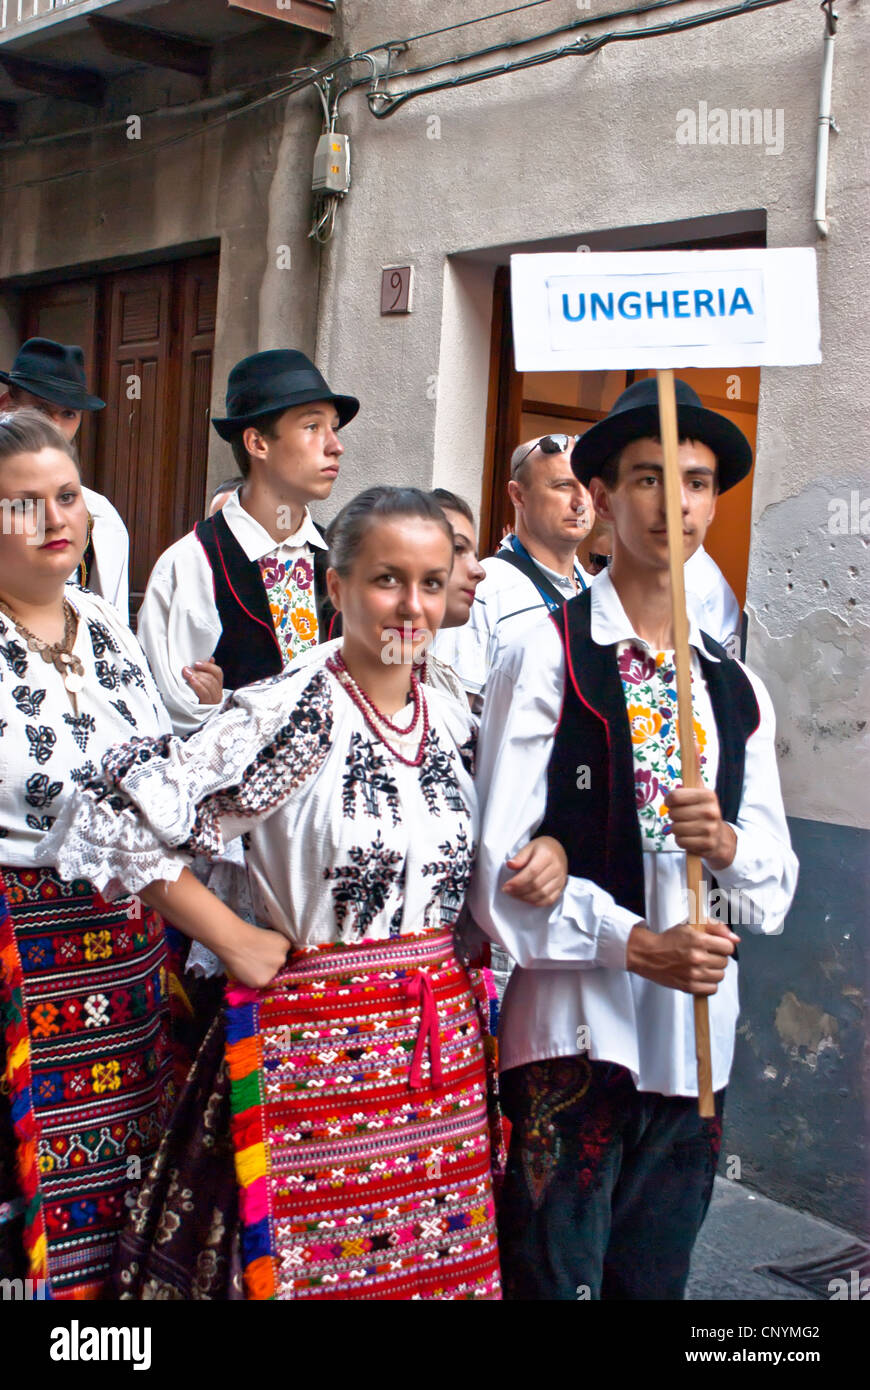 Hungarian folk group at the International 'Festival of hazelnuts', parade through the city Stock Photo